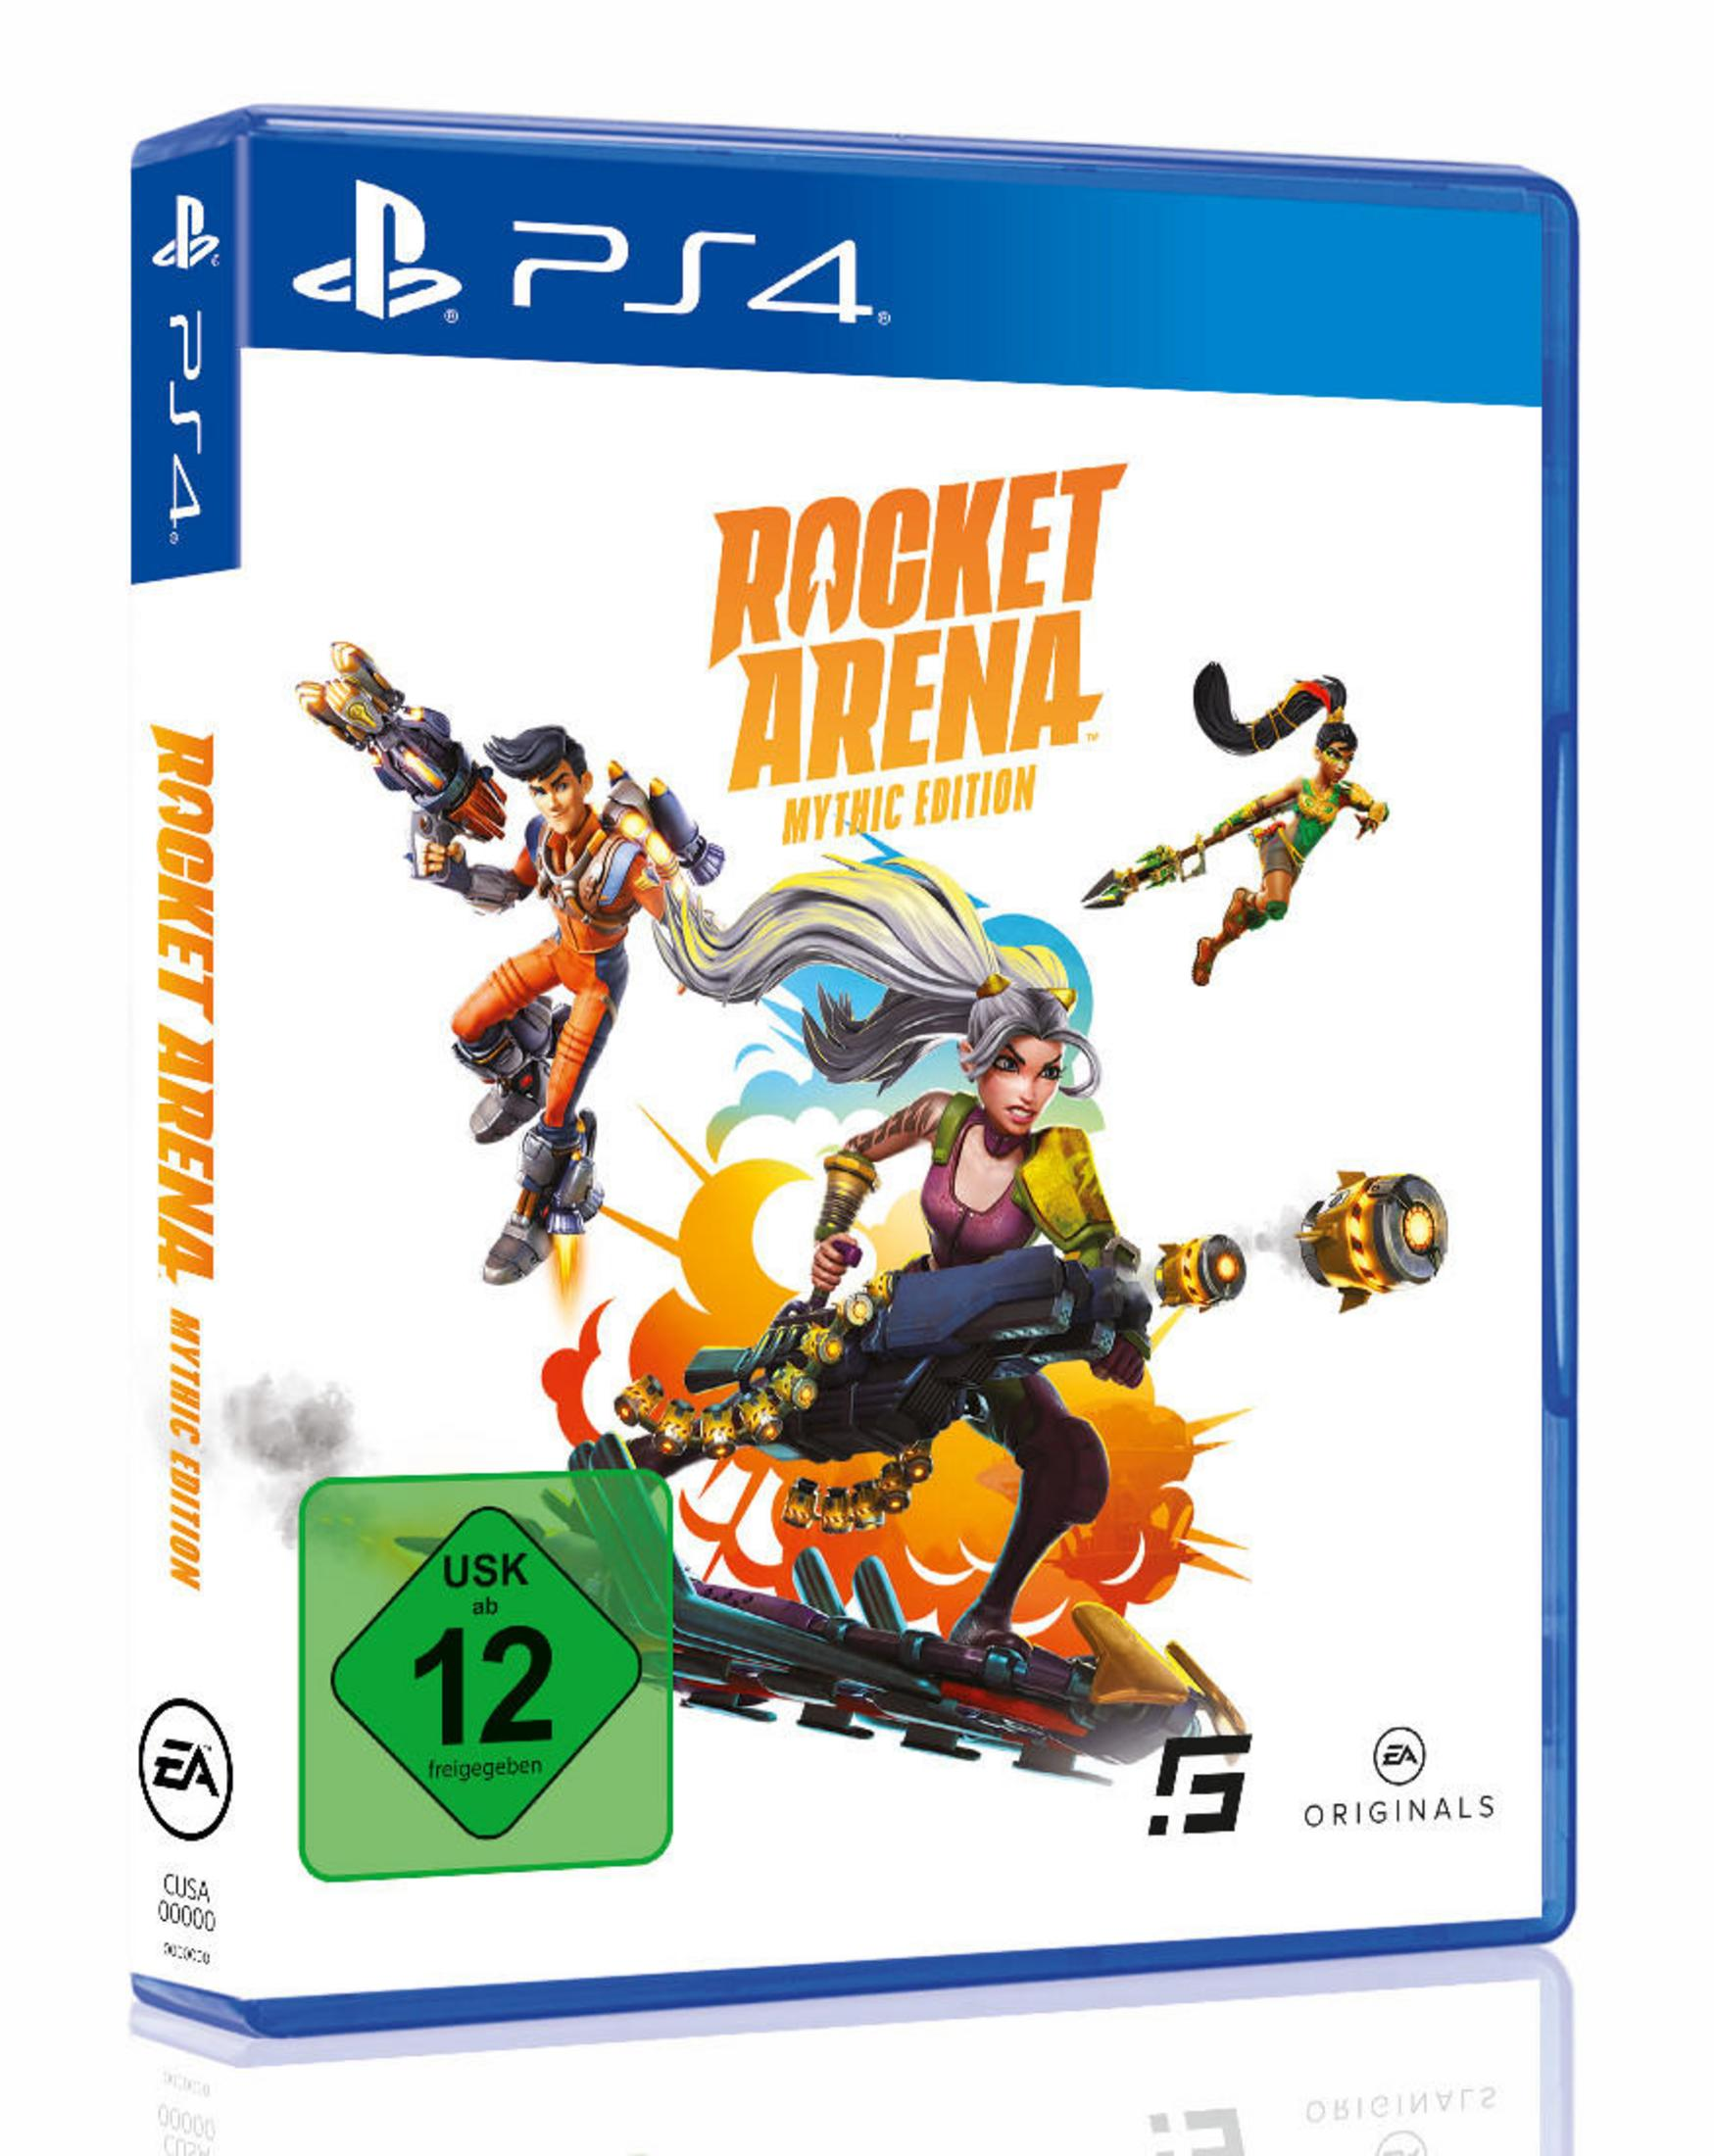 [PlayStation Mythic PS4 4] Edition - Arena Rocket